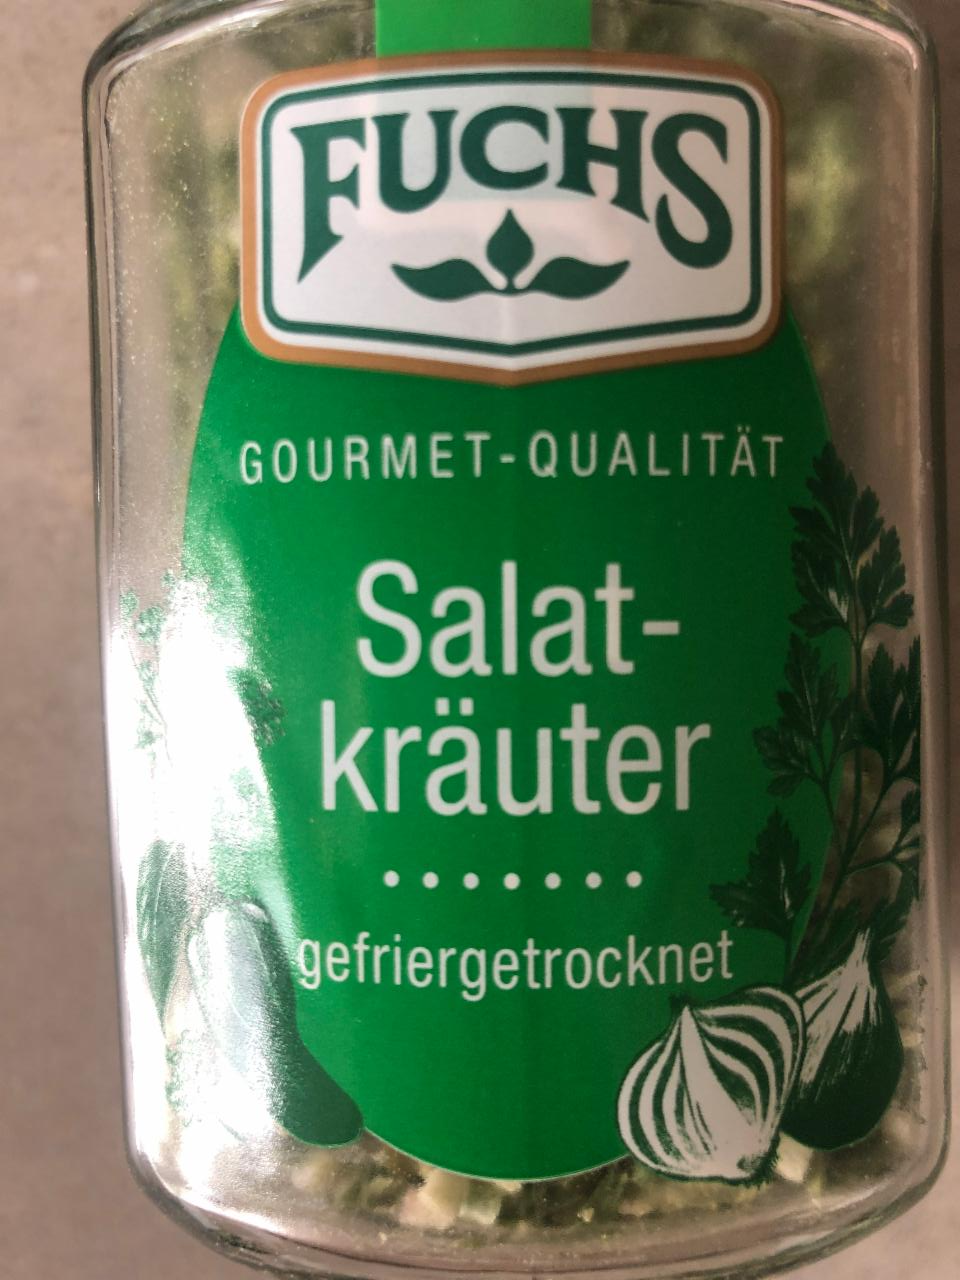 Fotografie - Salatkräuter Fuchs getrocknet